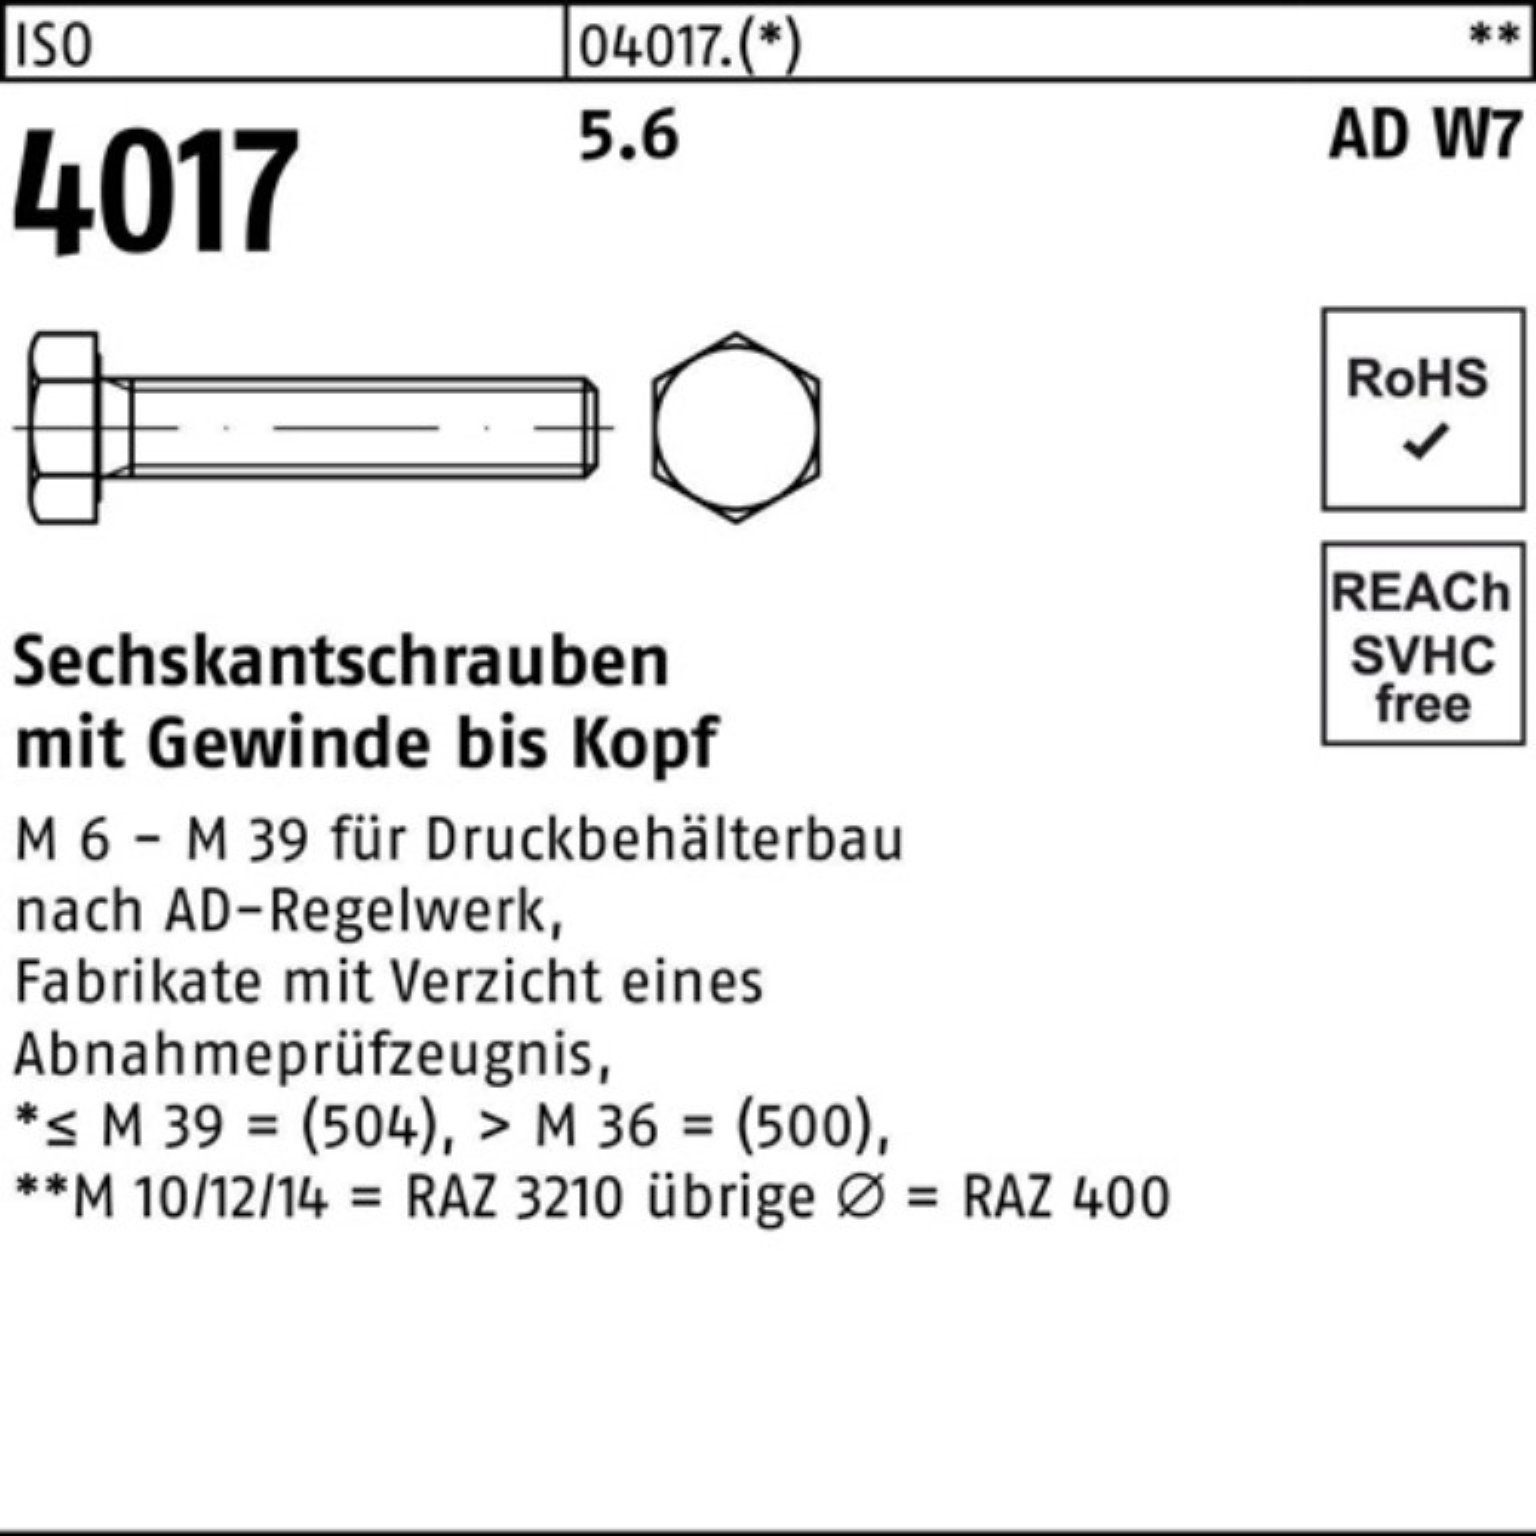 Bufab Sechskantschraube 100er Pack Sechskantschraube ISO 4017 VG M24x 100 5.6 AD W7 10 Stück